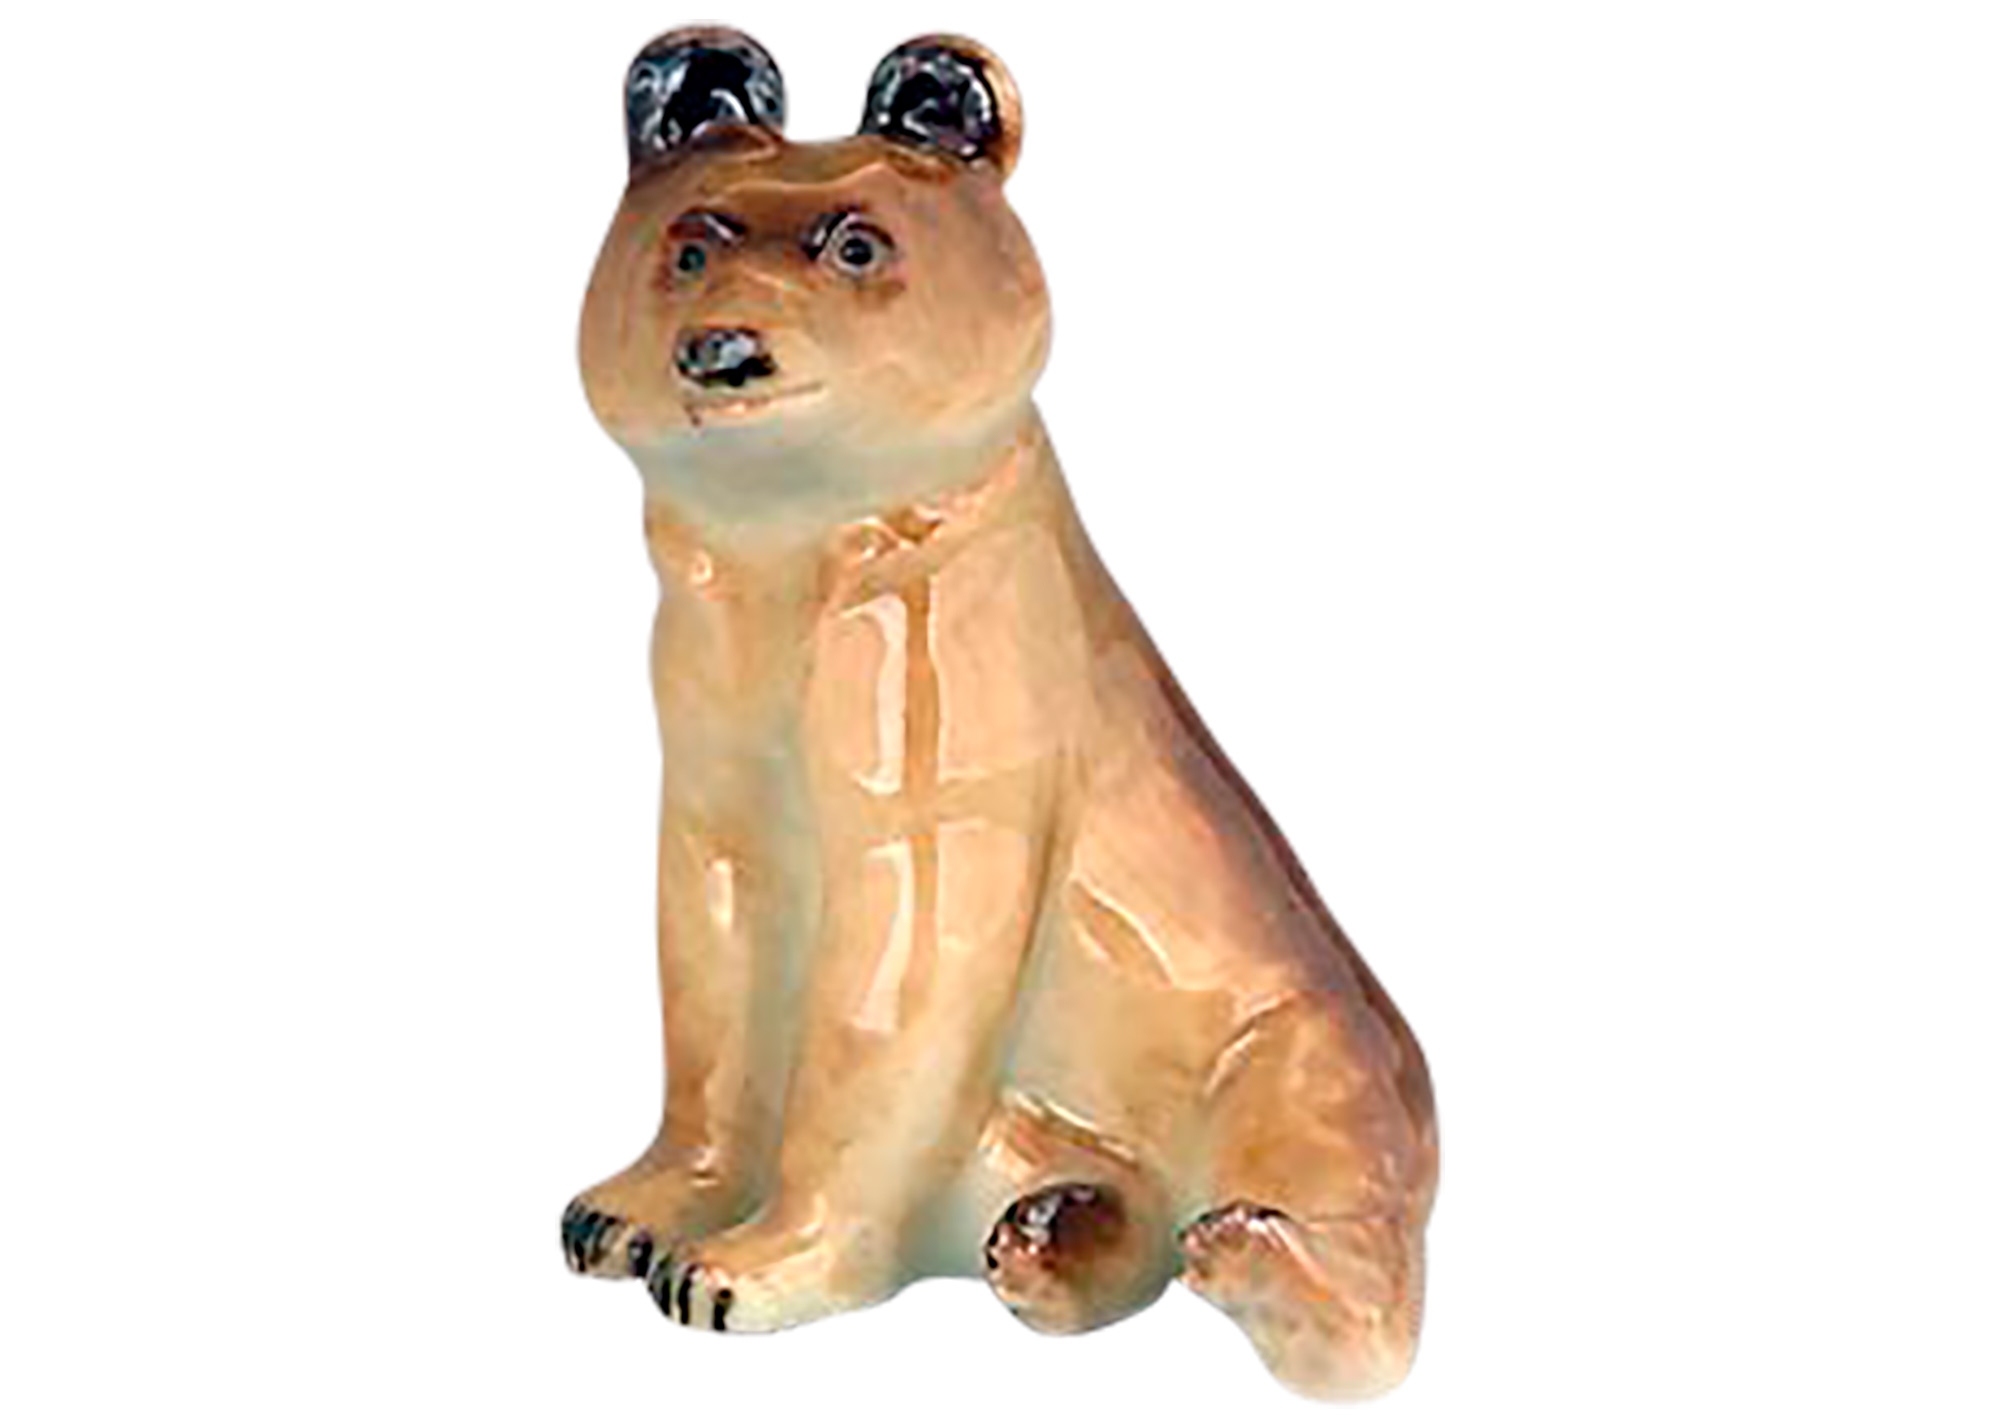 Buy Curious Kodiak Bear Cub Figurine at GoldenCockerel.com